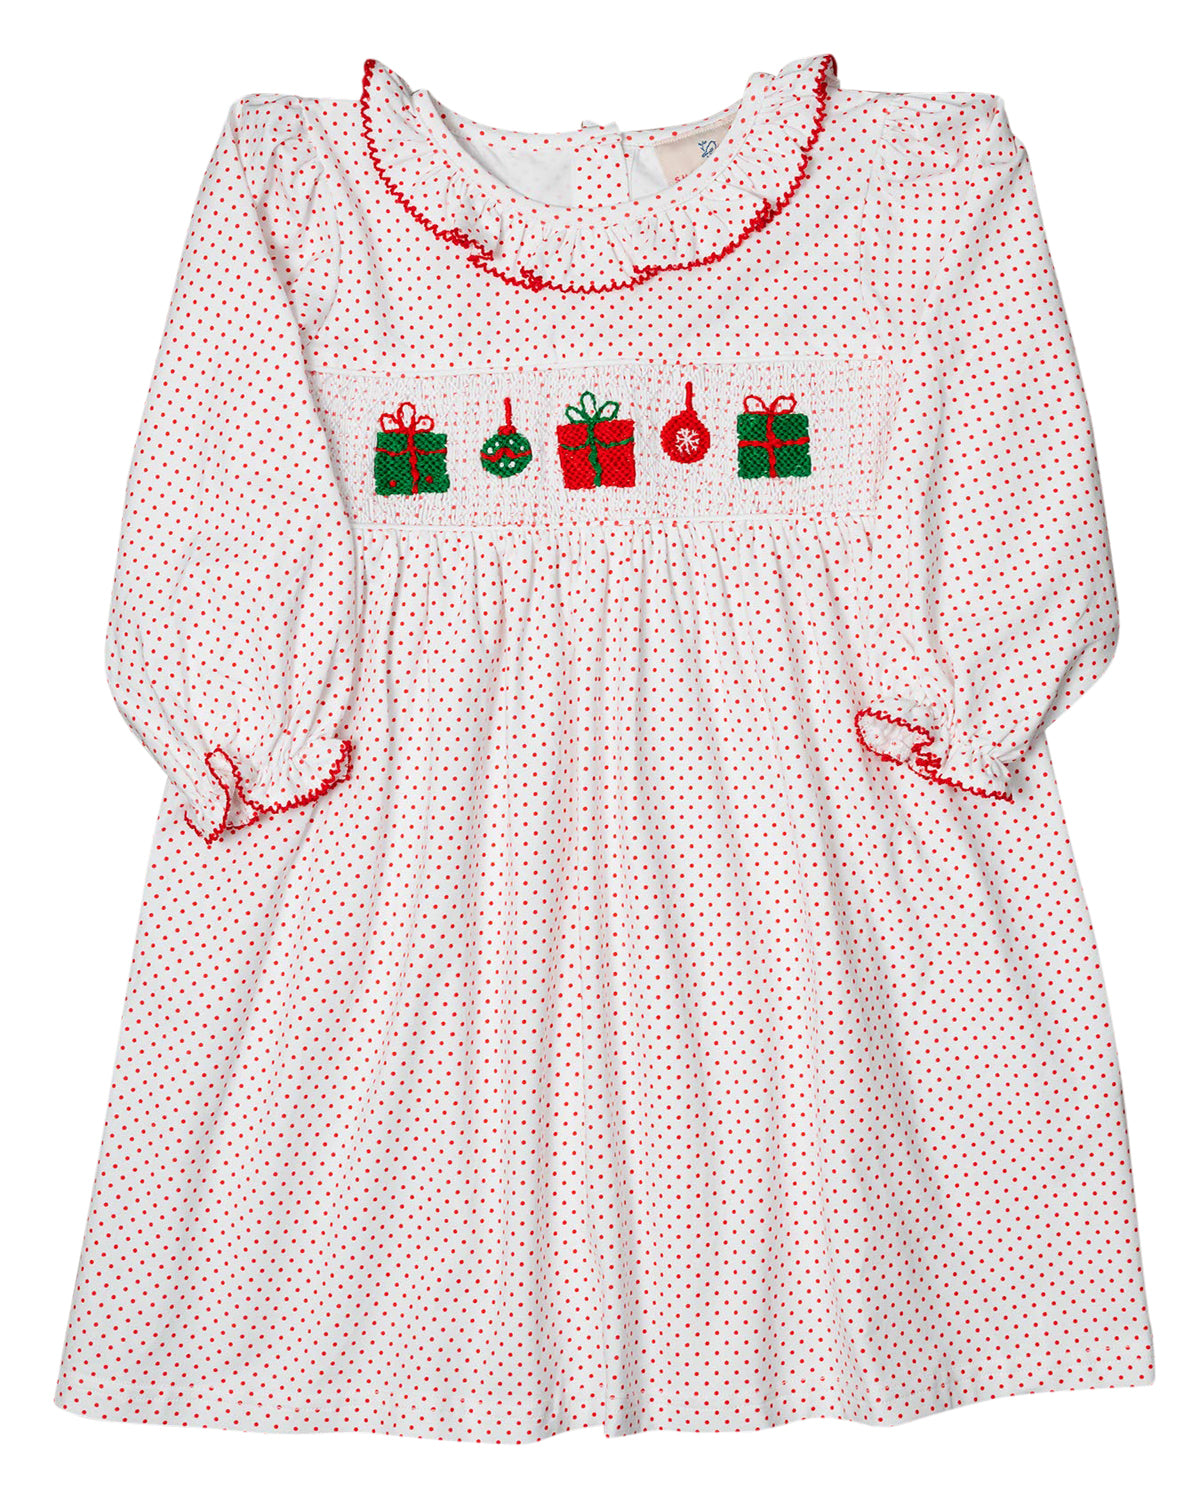 Presents Smocked Polka Dot Knit Dress